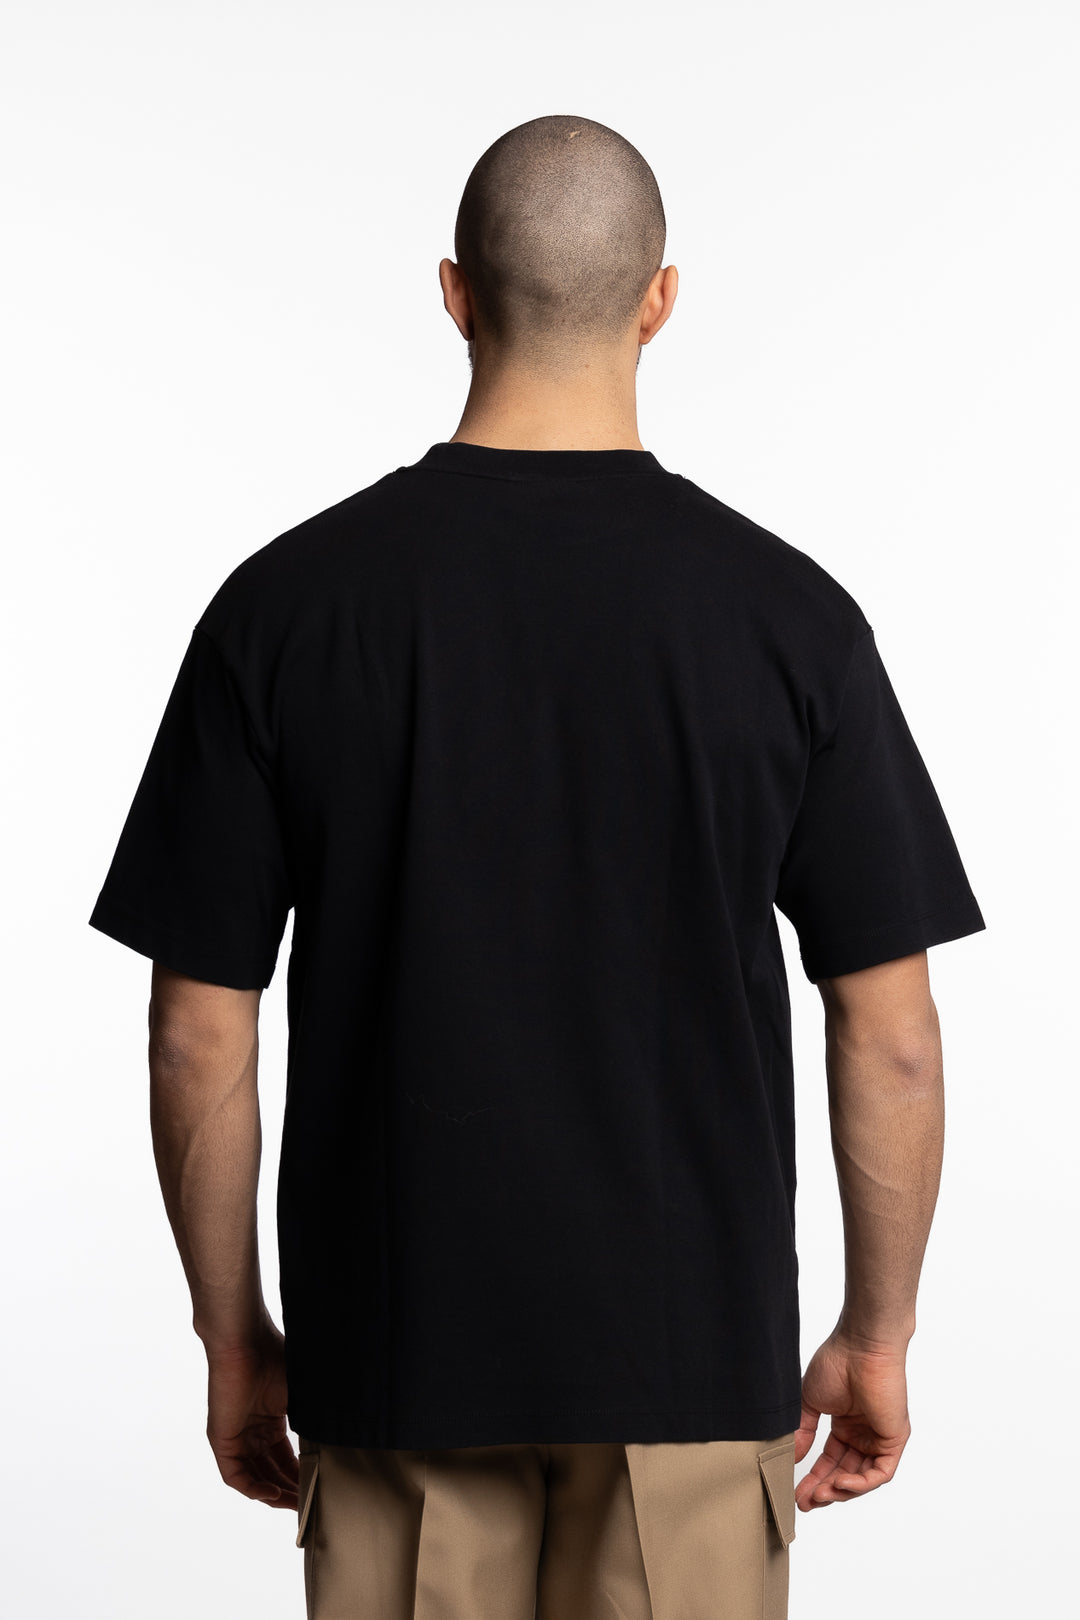 NFPM T-Shirt Black